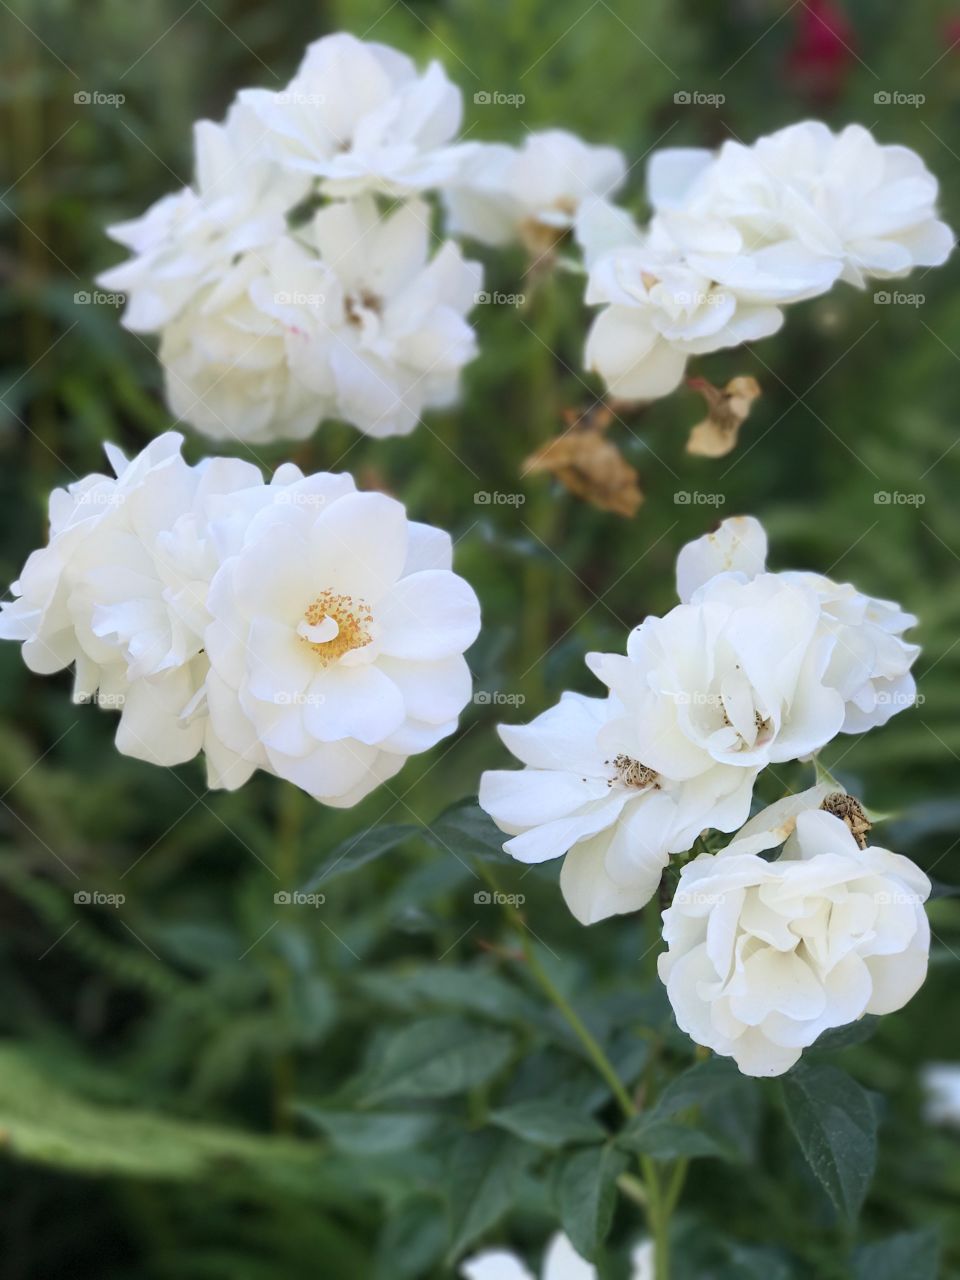 Portland Rose garden: Bunch of Roses